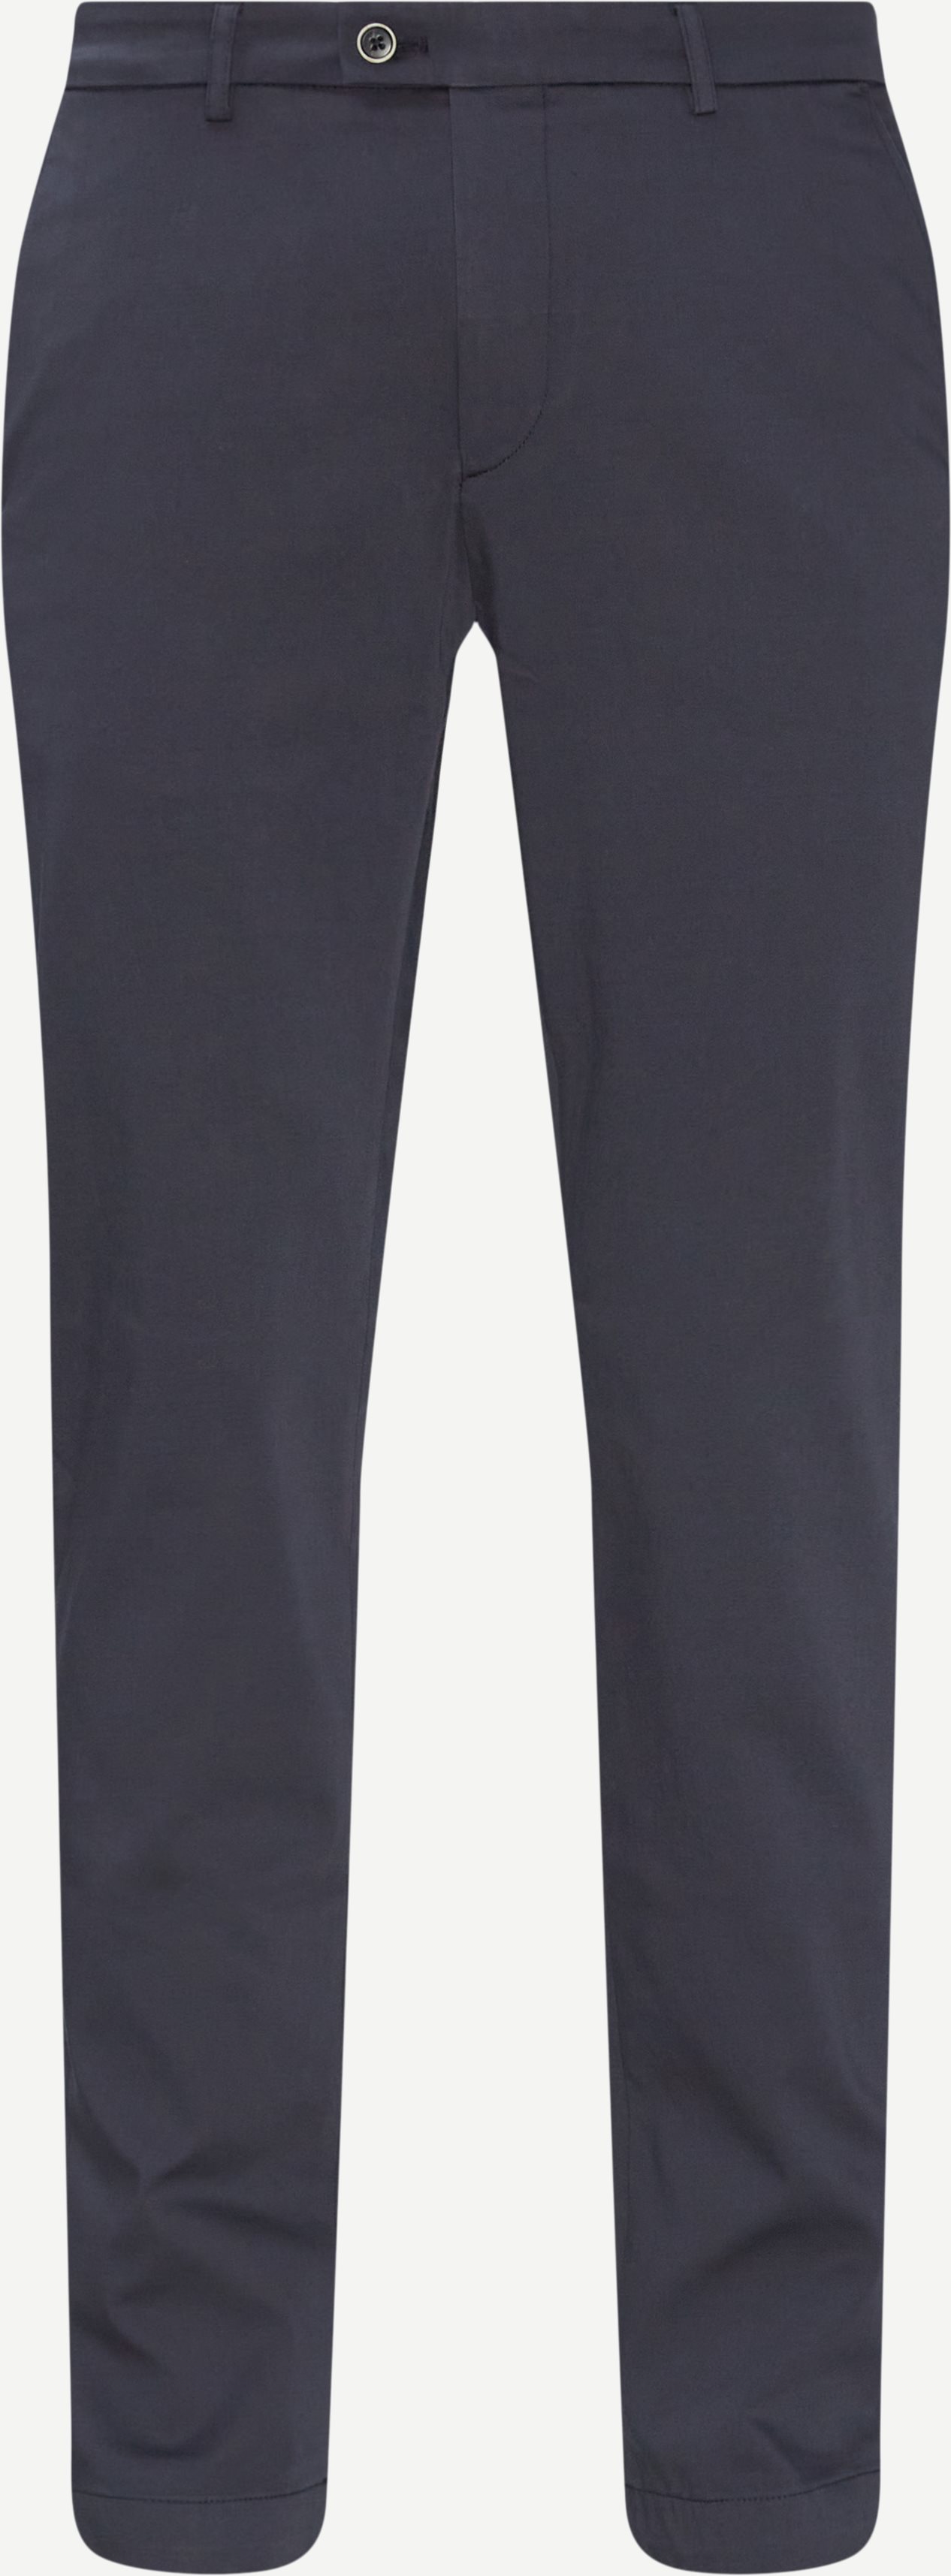 Trousers - Slim fit - Blue